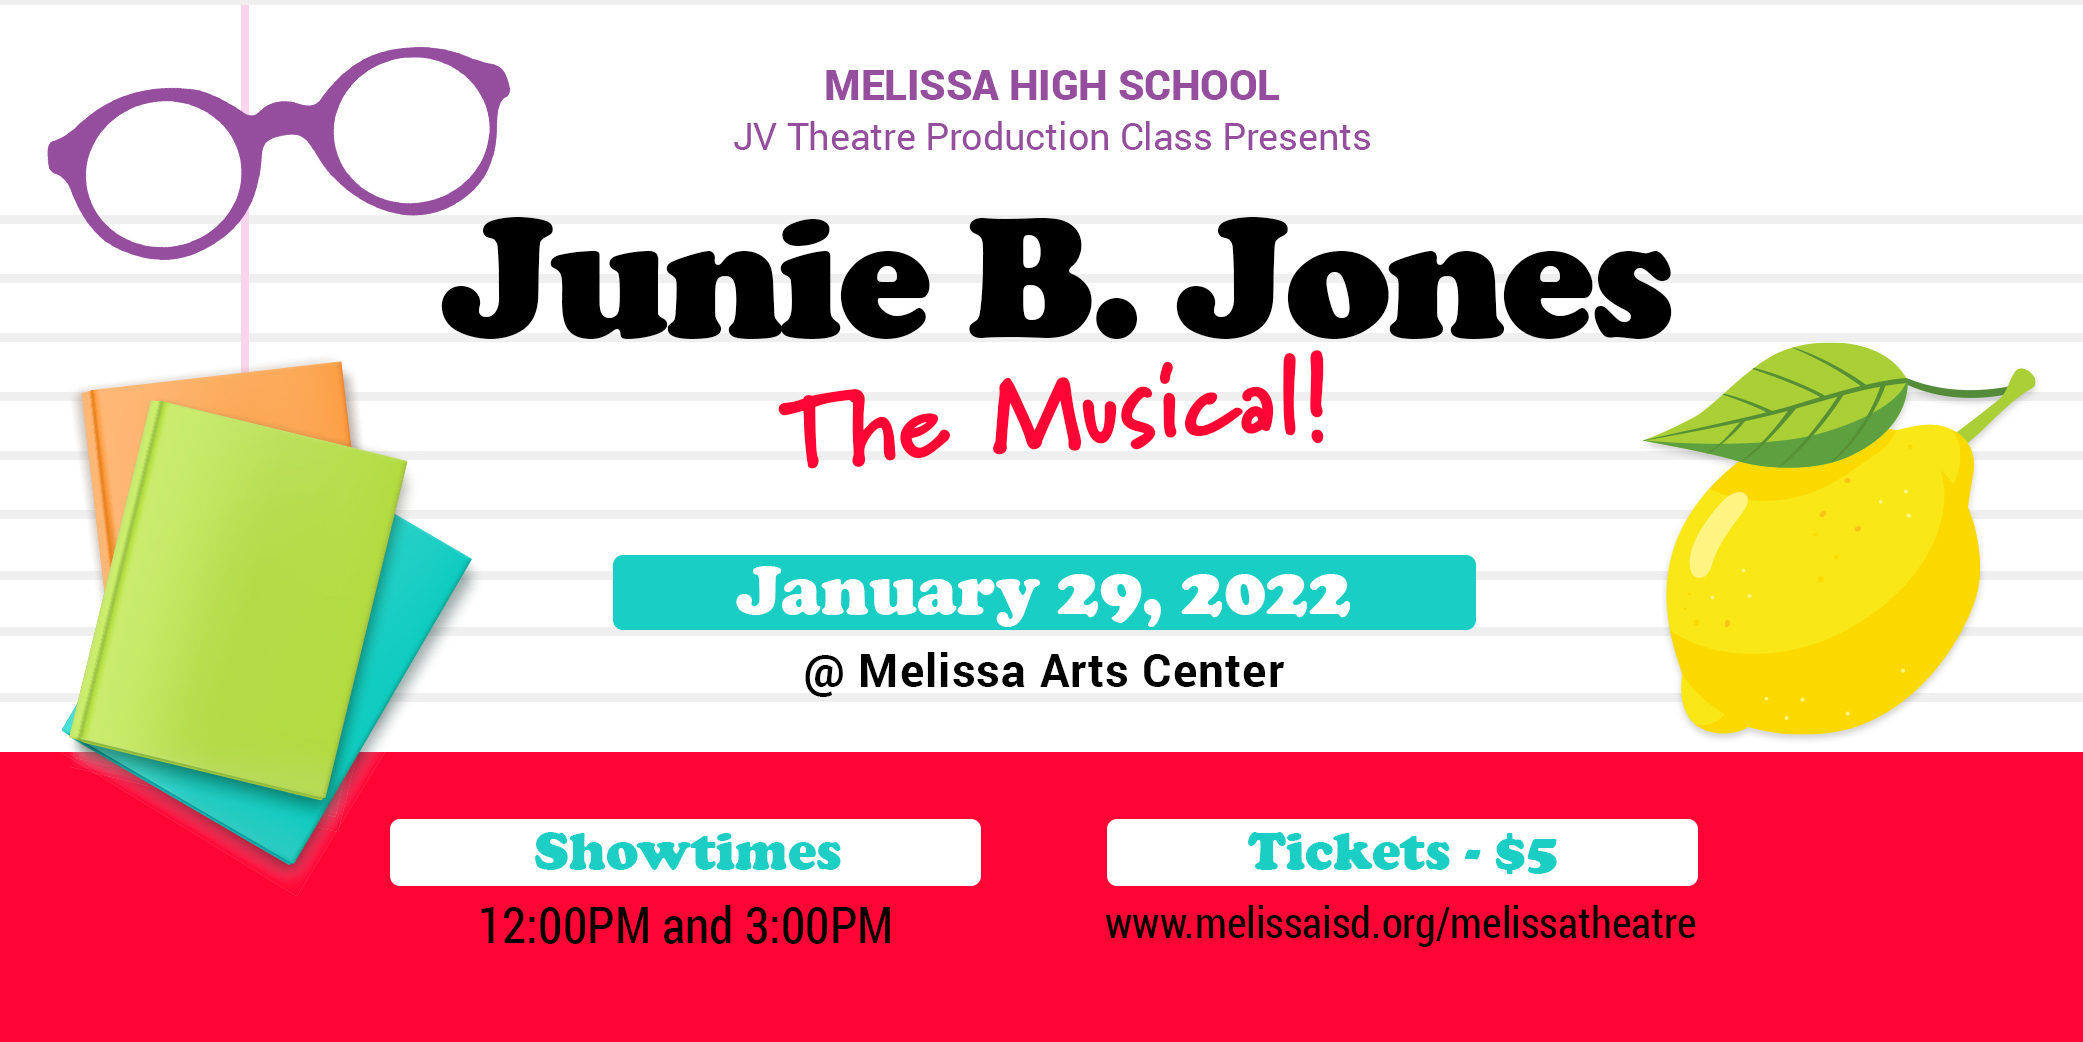 a graphic advertising "Junie B. Jones: The Musical"